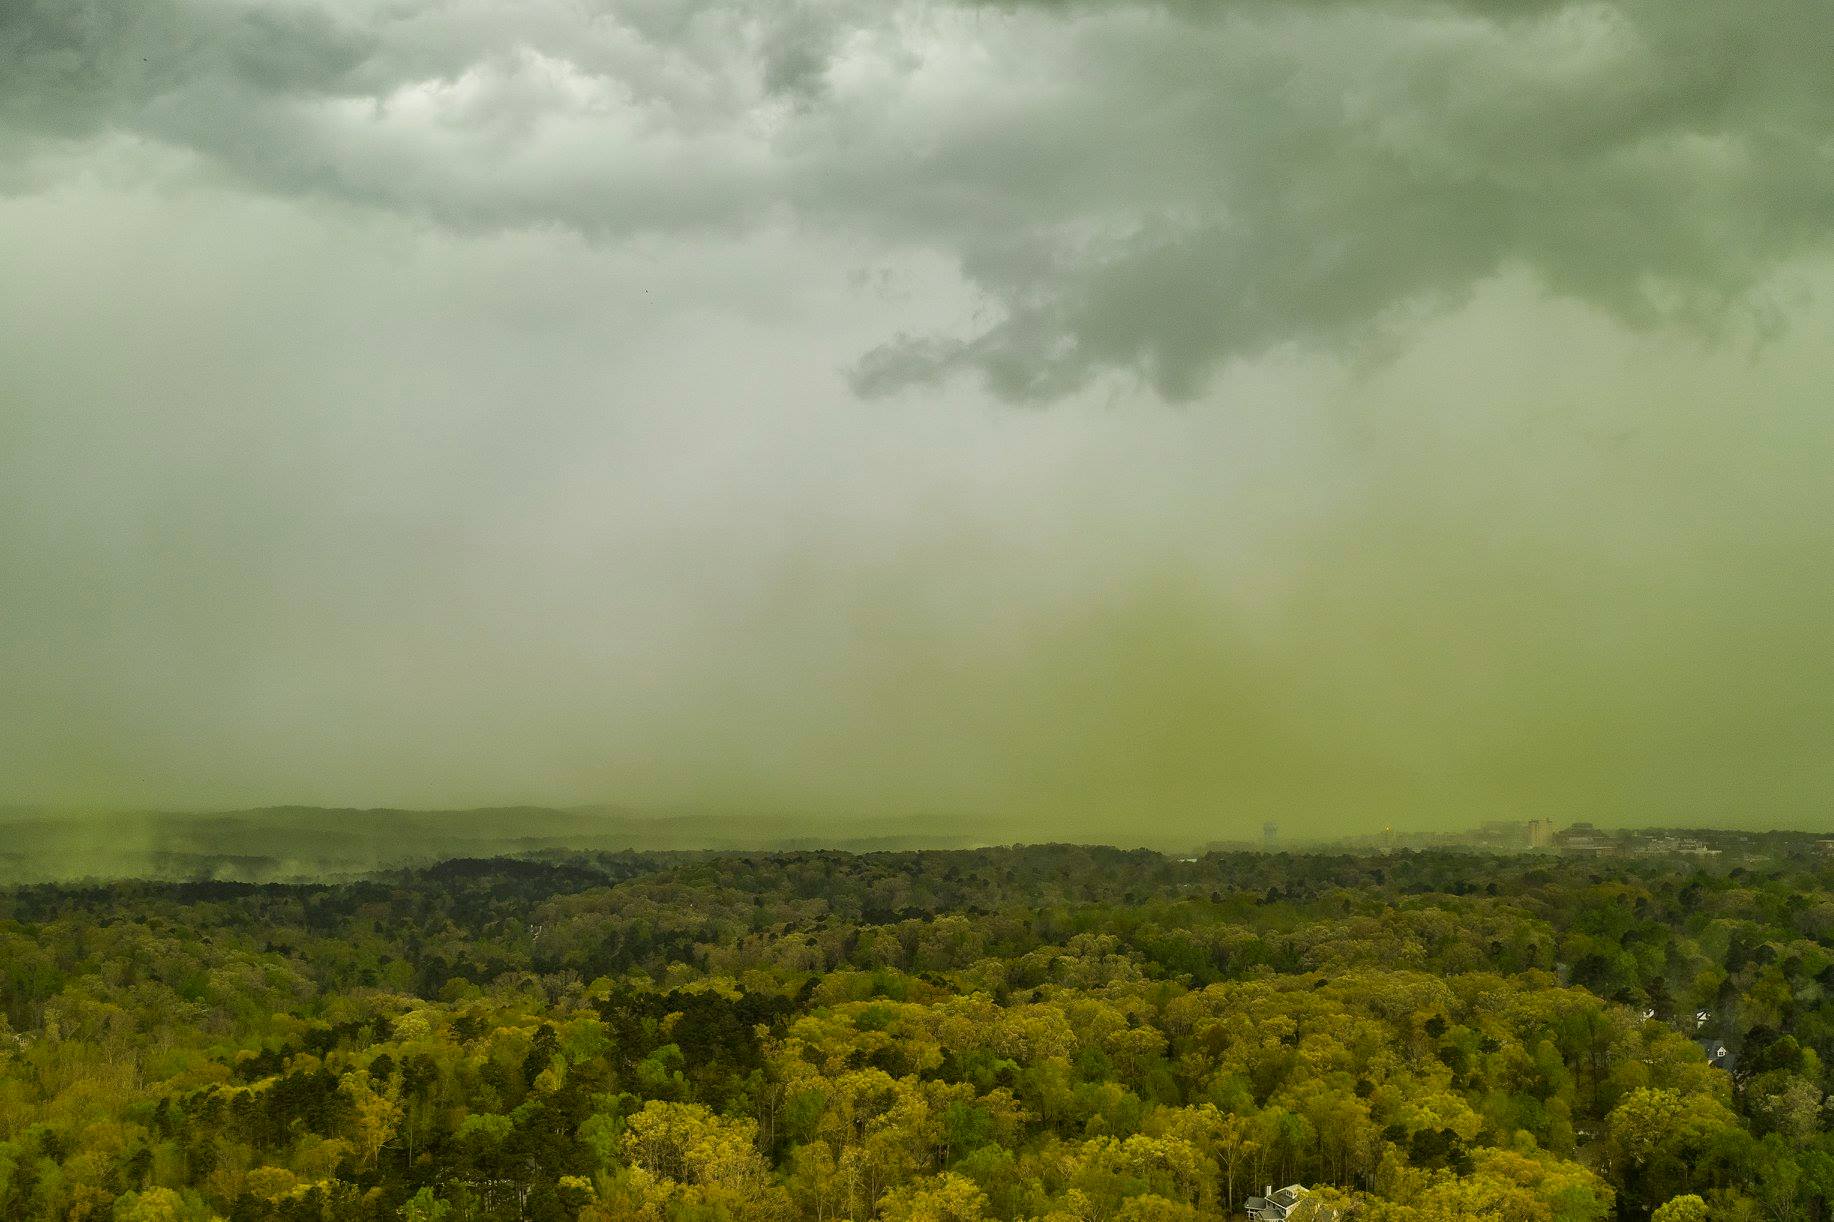 Photographer captures amazing pictures of pollen cloud engulfing city